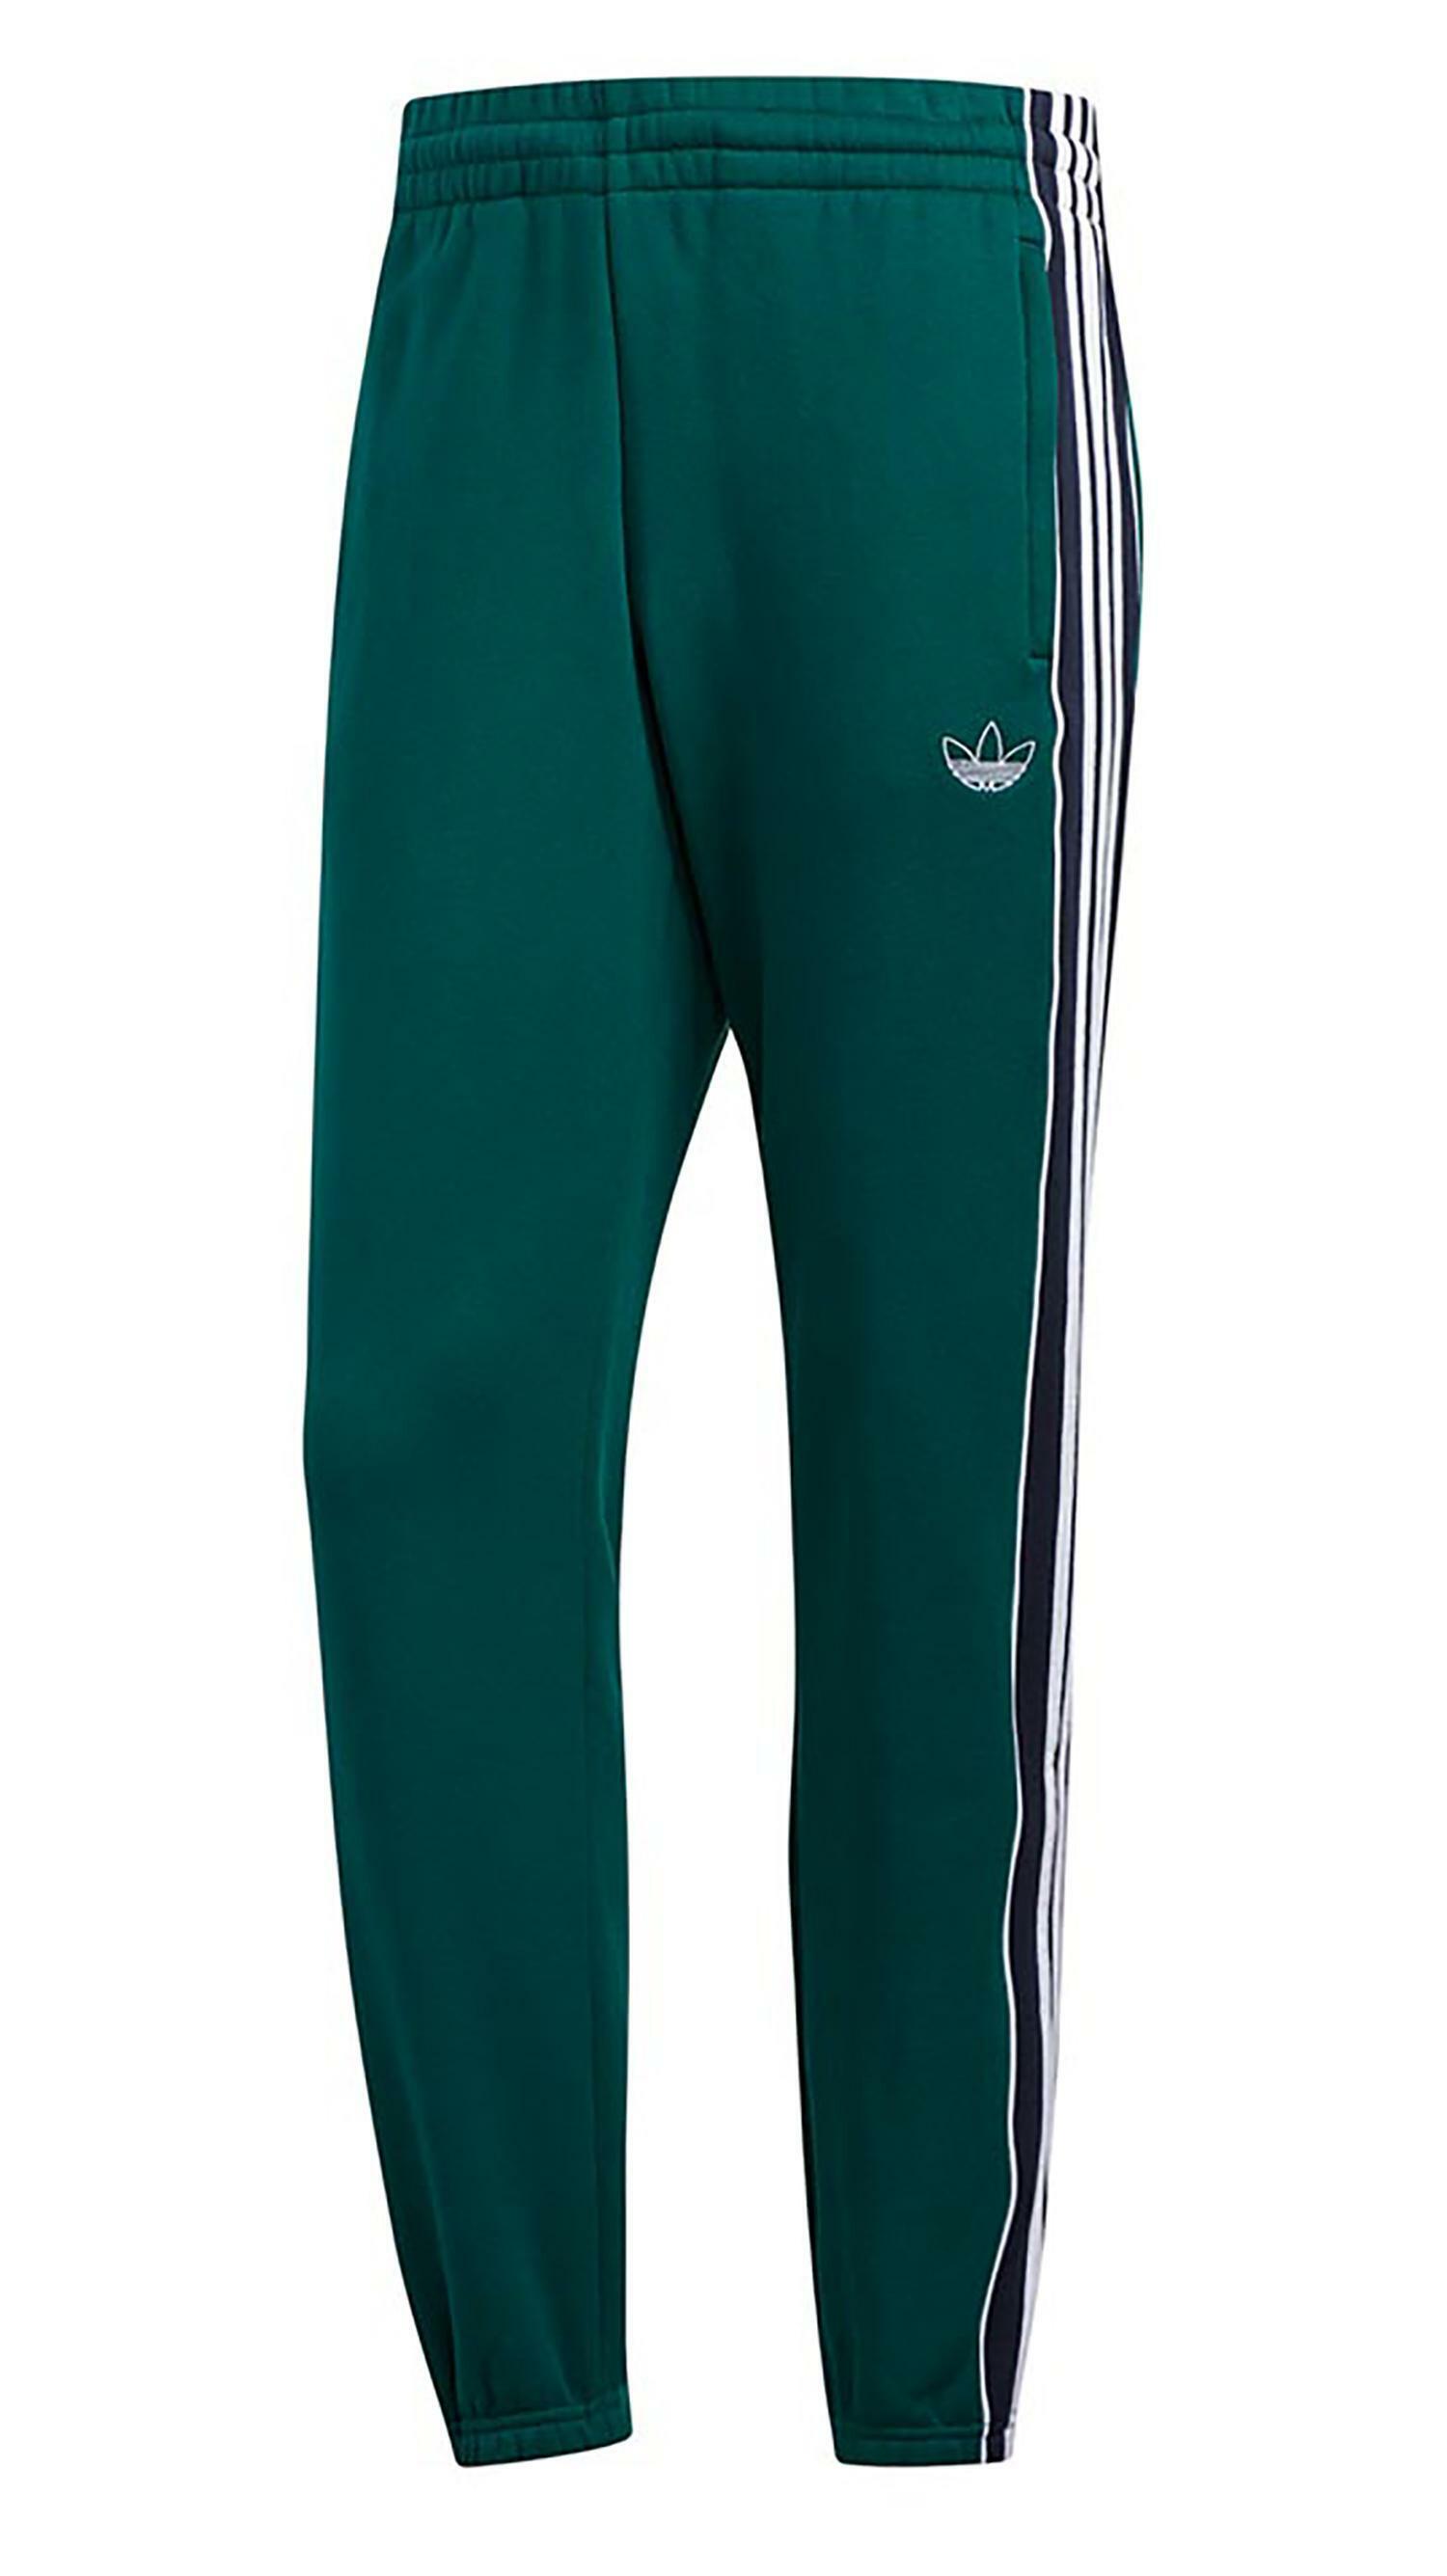 Adidas 3 stripe panel pantaloni uomo verdi ej7112